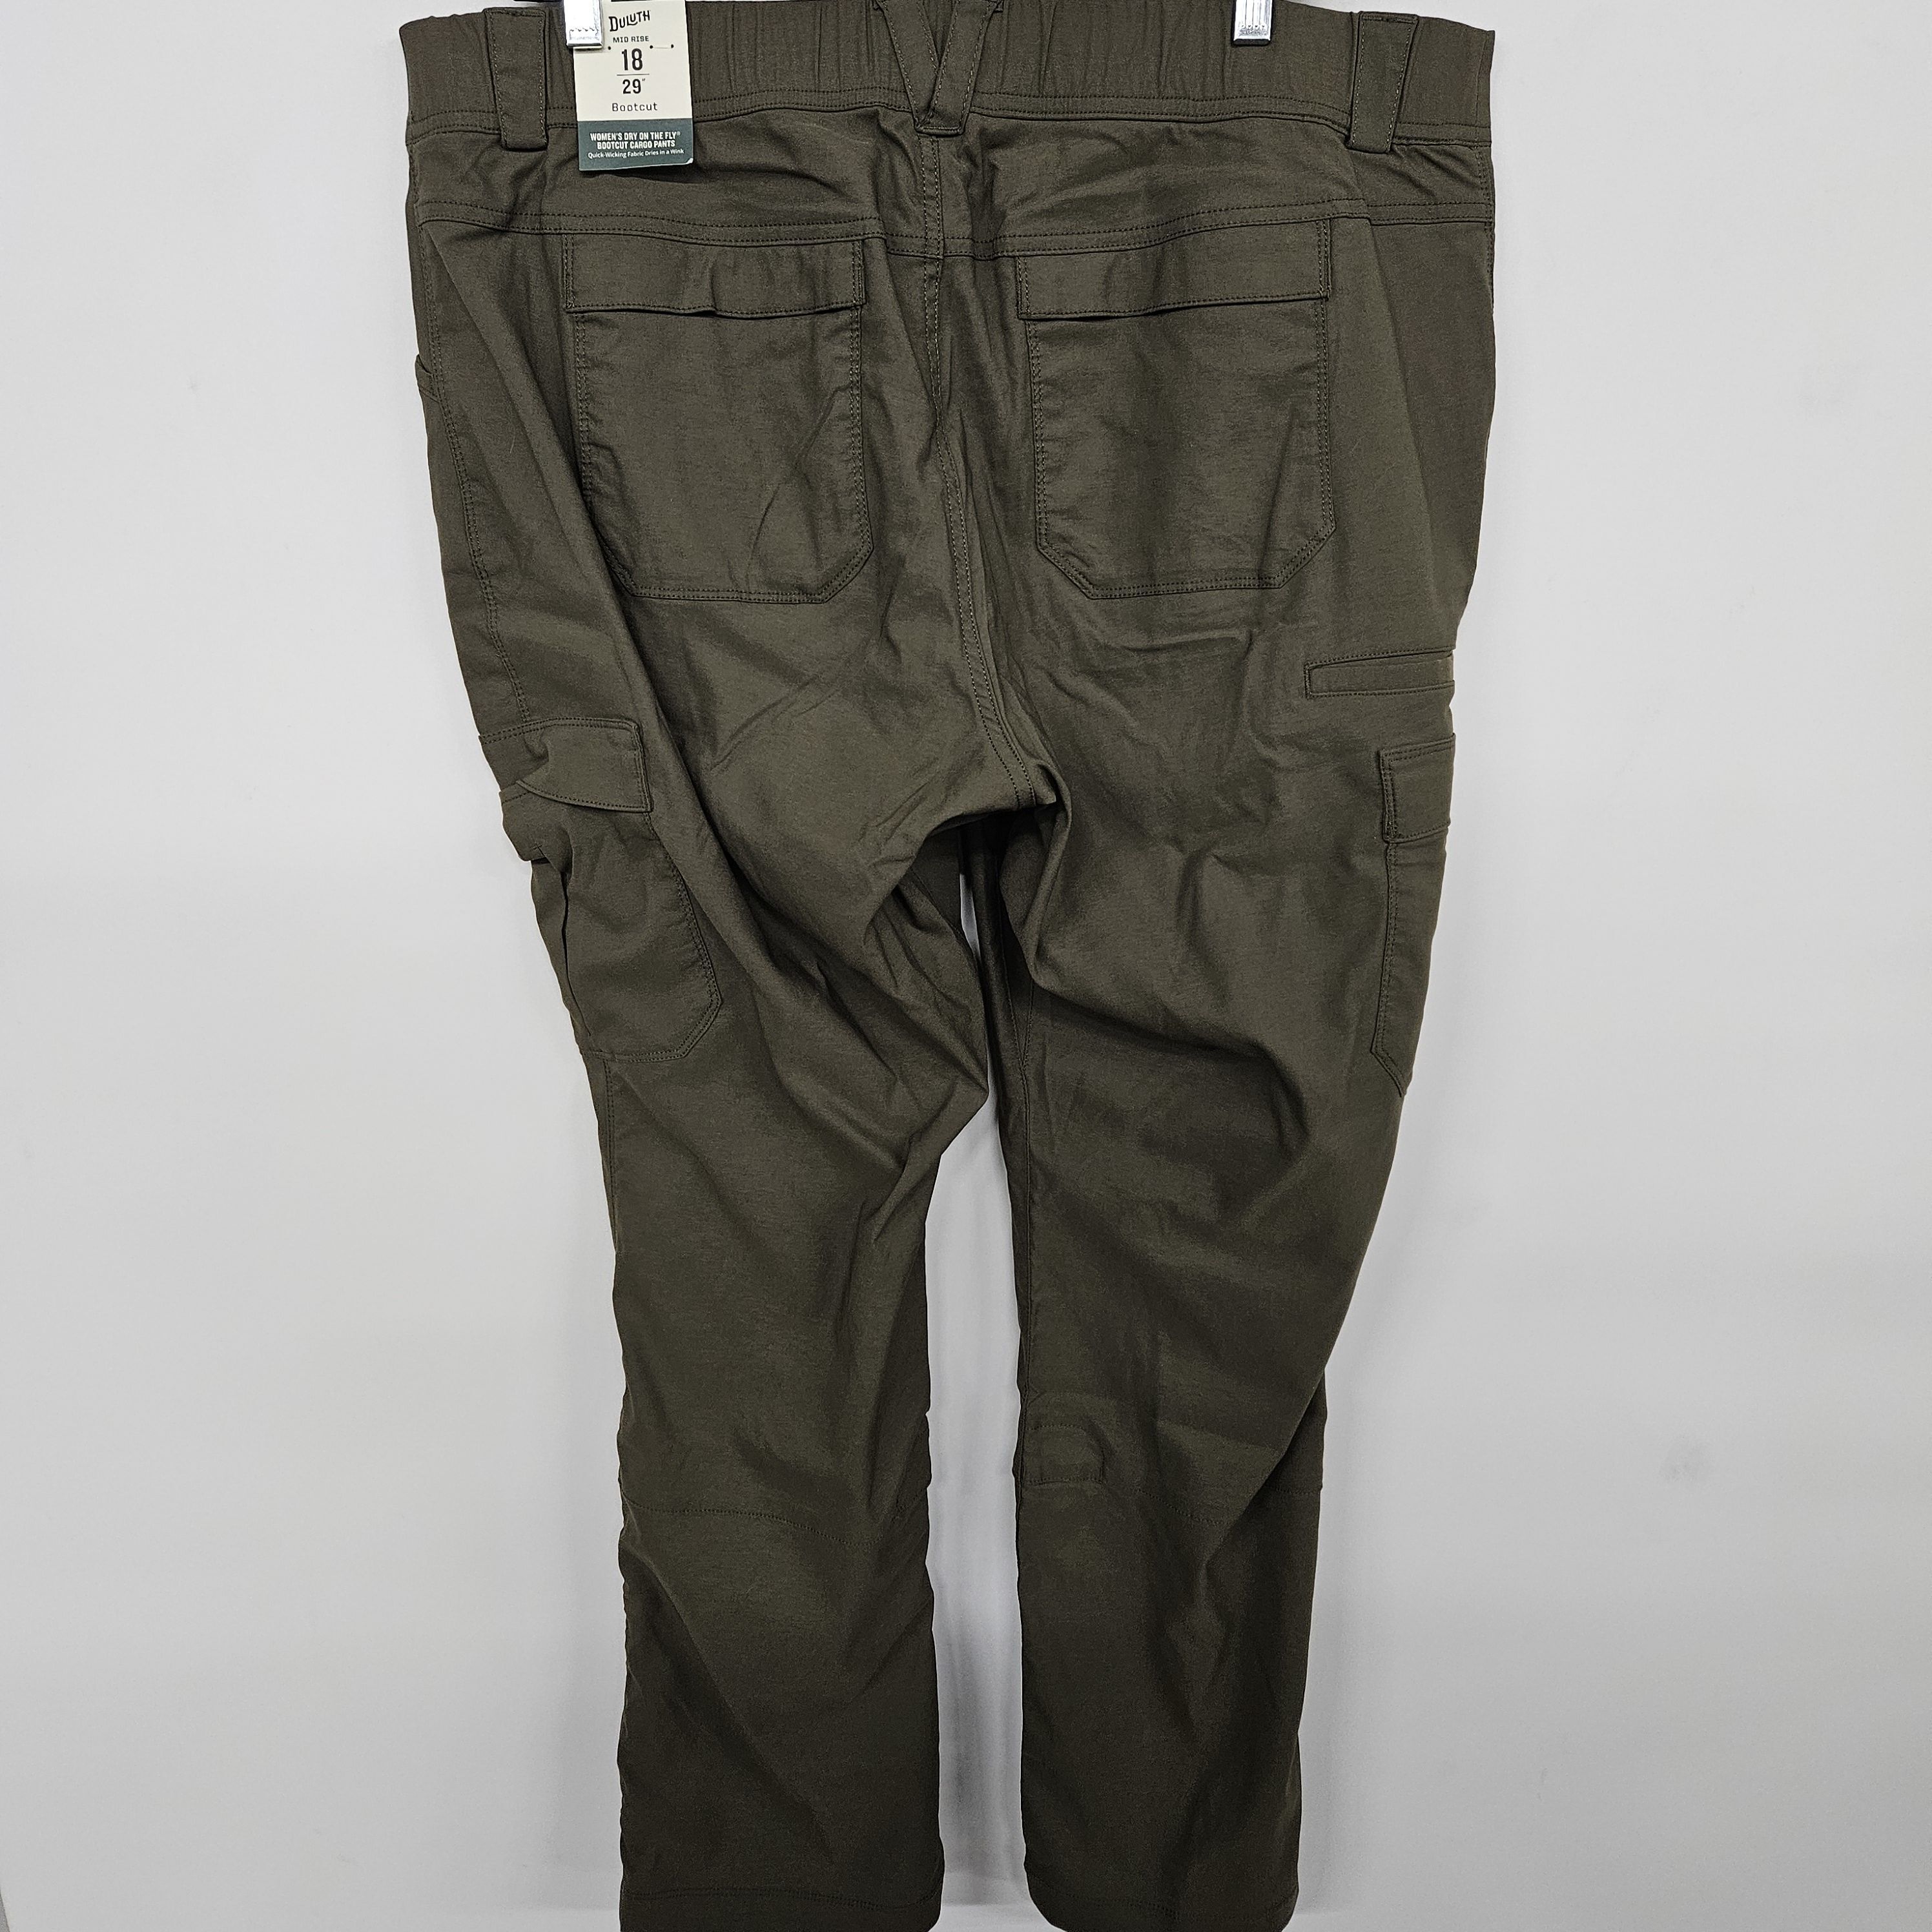 Bootcut Cargo Pants just restocked on mnml.la | Free shipping worldwide |  Instagram